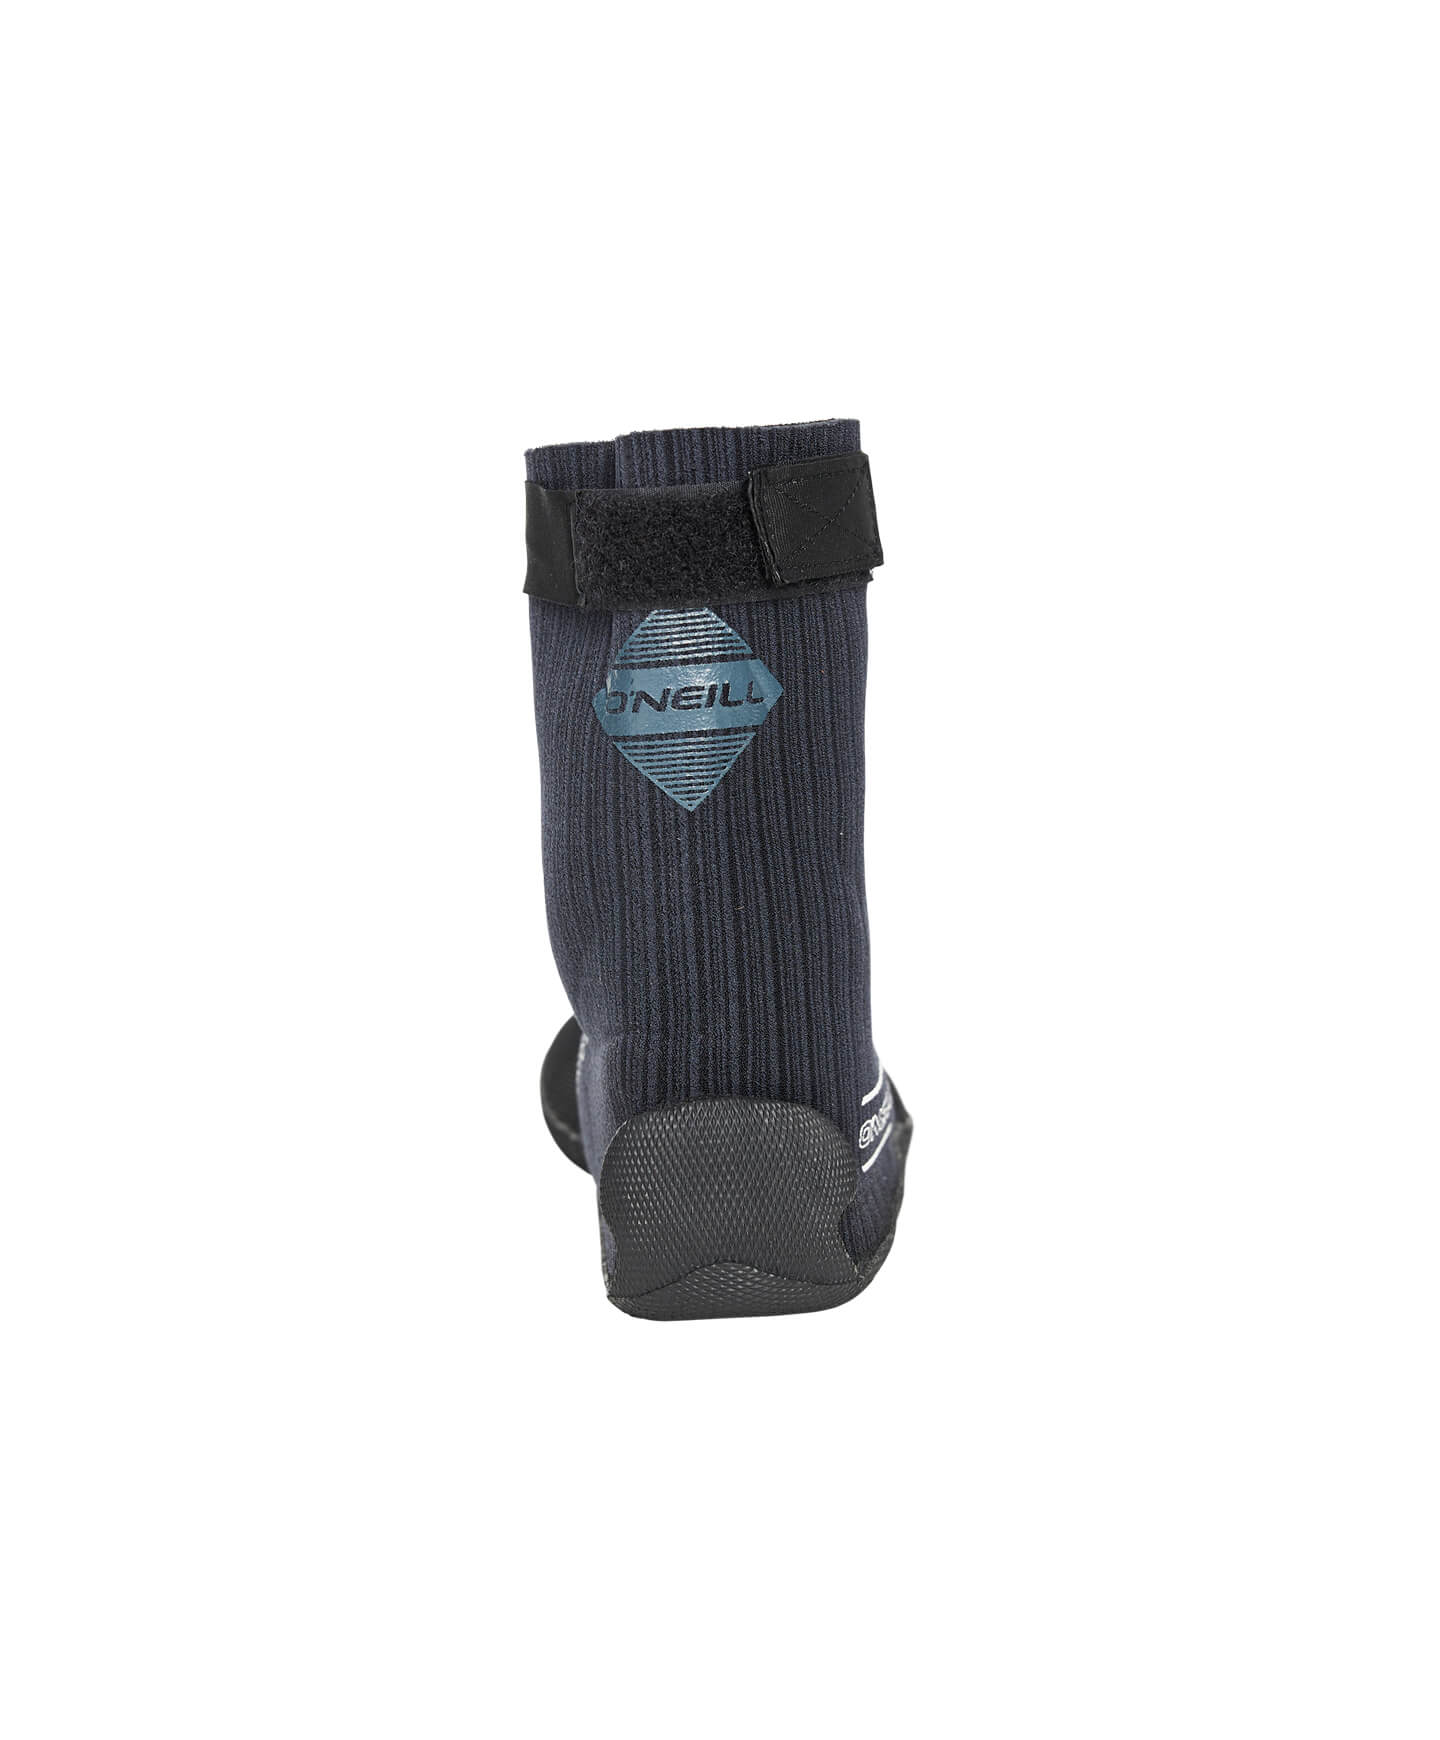 Hyperfreak Ninja 3mm Split Toe Wetsuit Boot - Black